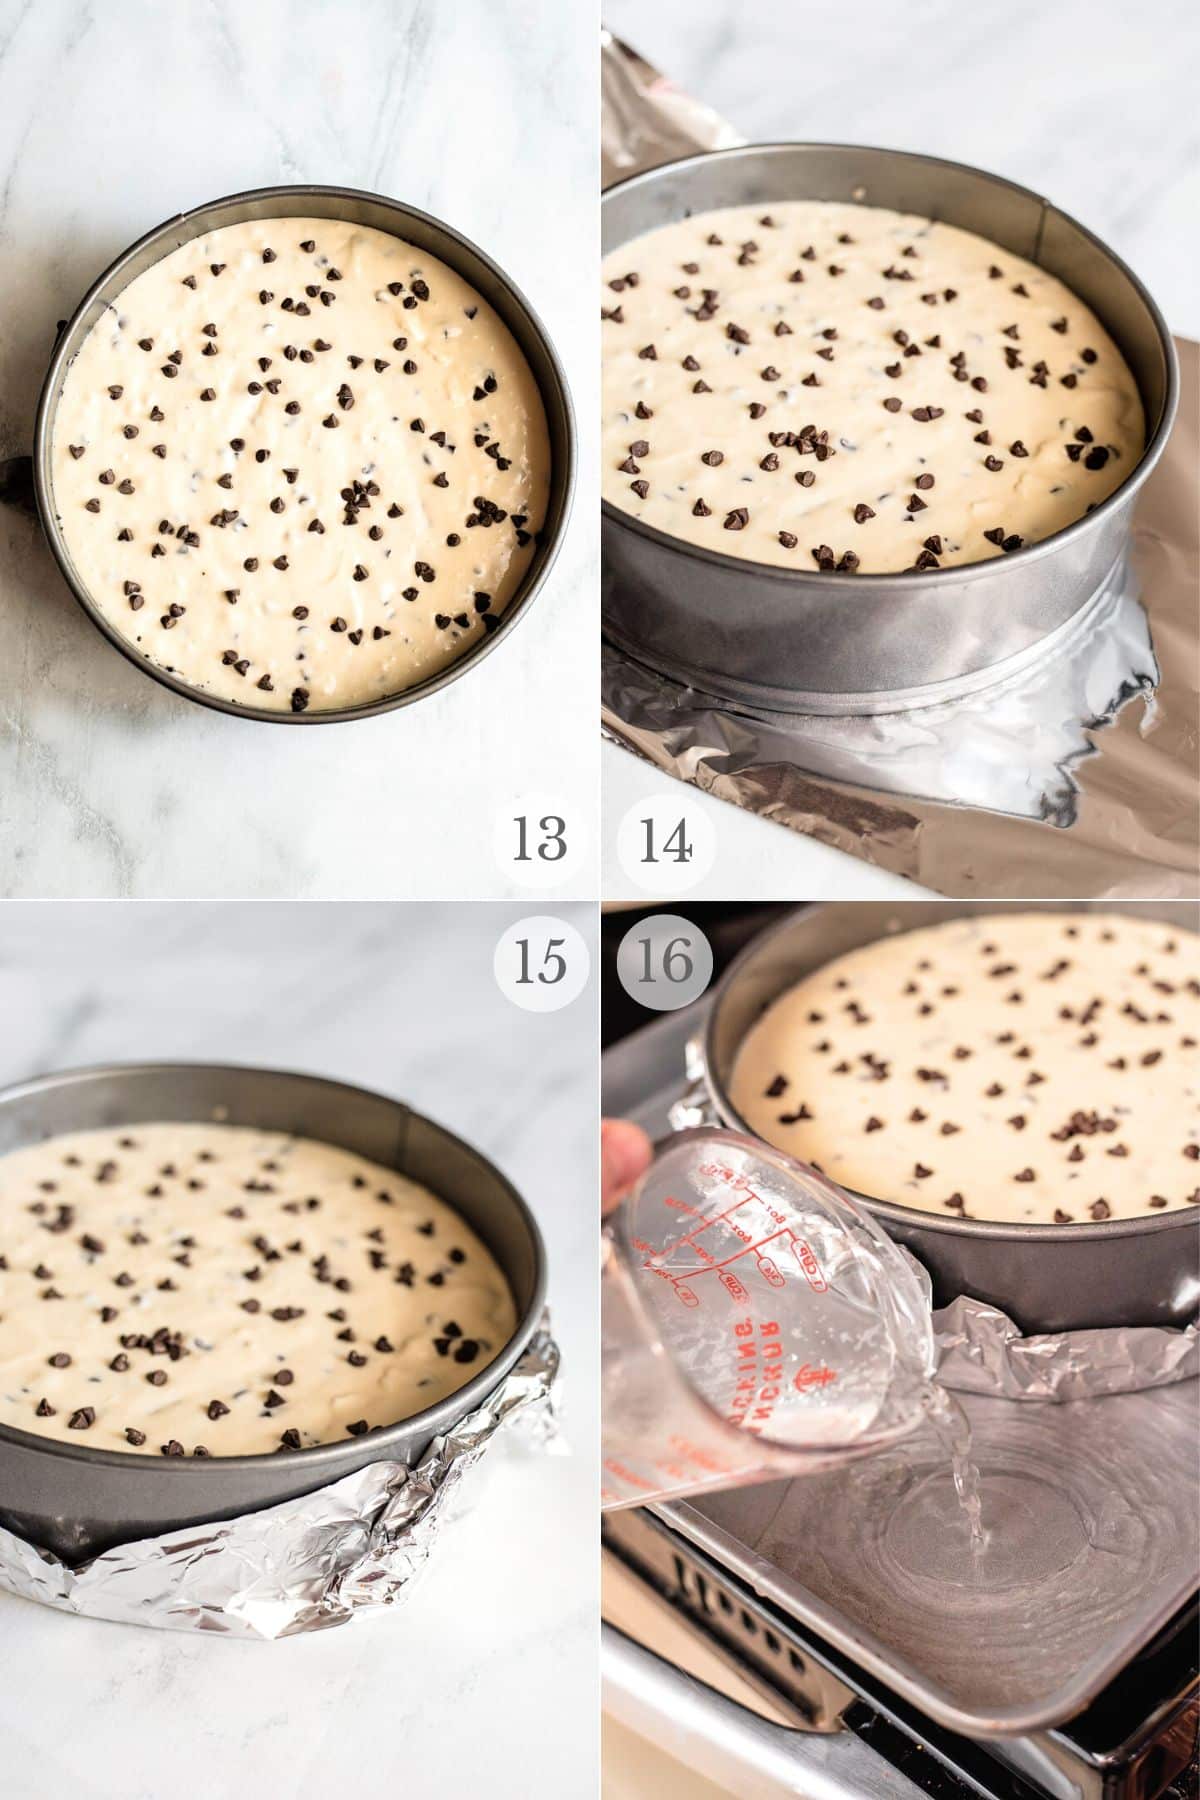 chocolate chip cheesecake recipe steps 13-16.